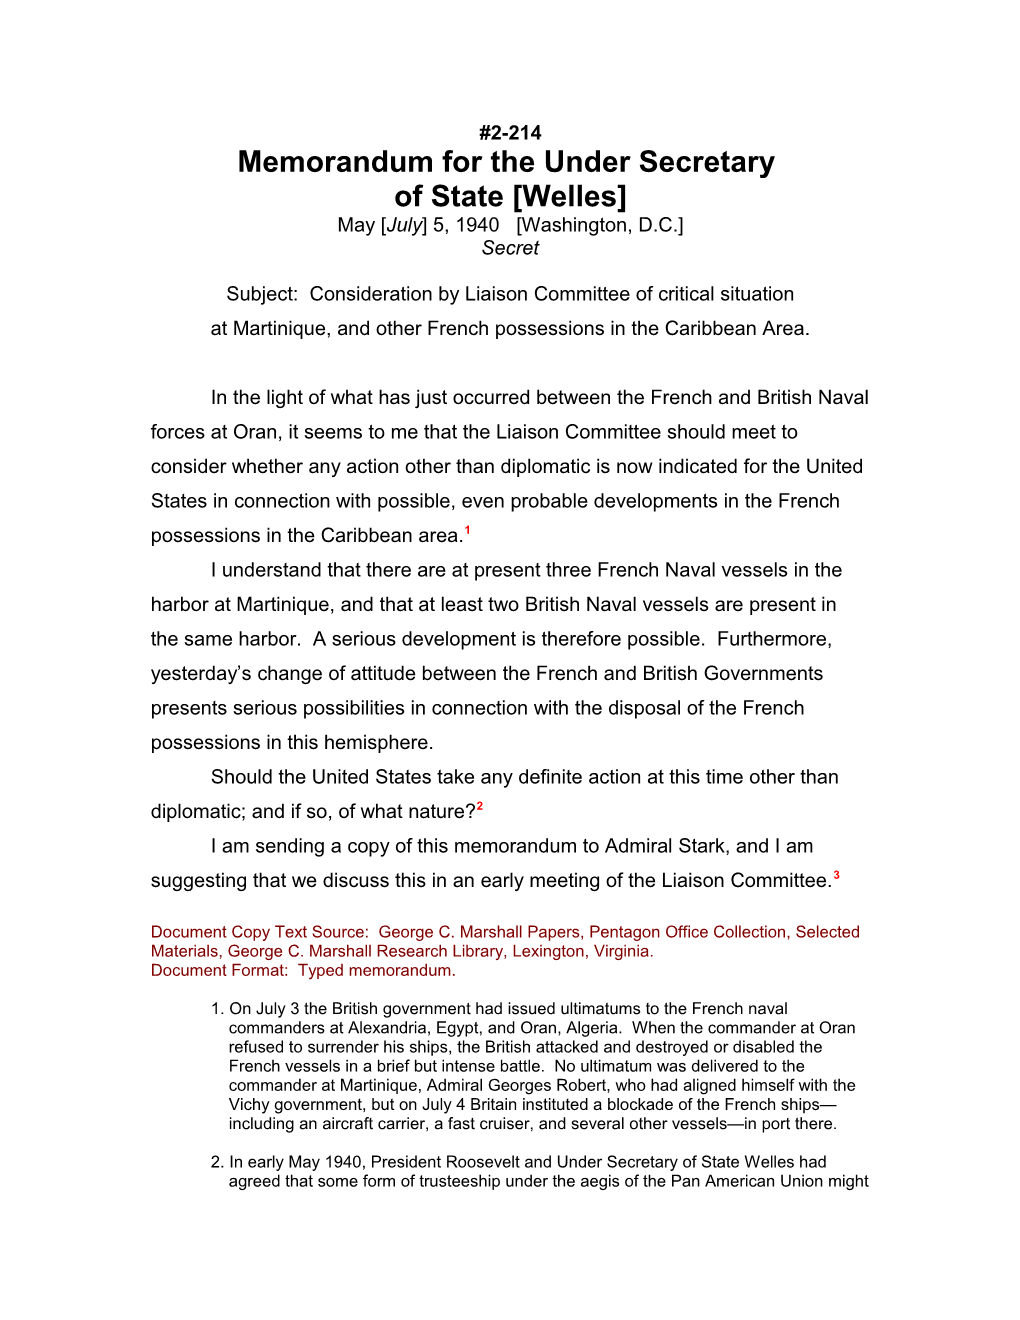 Memorandum for the Under Secretary